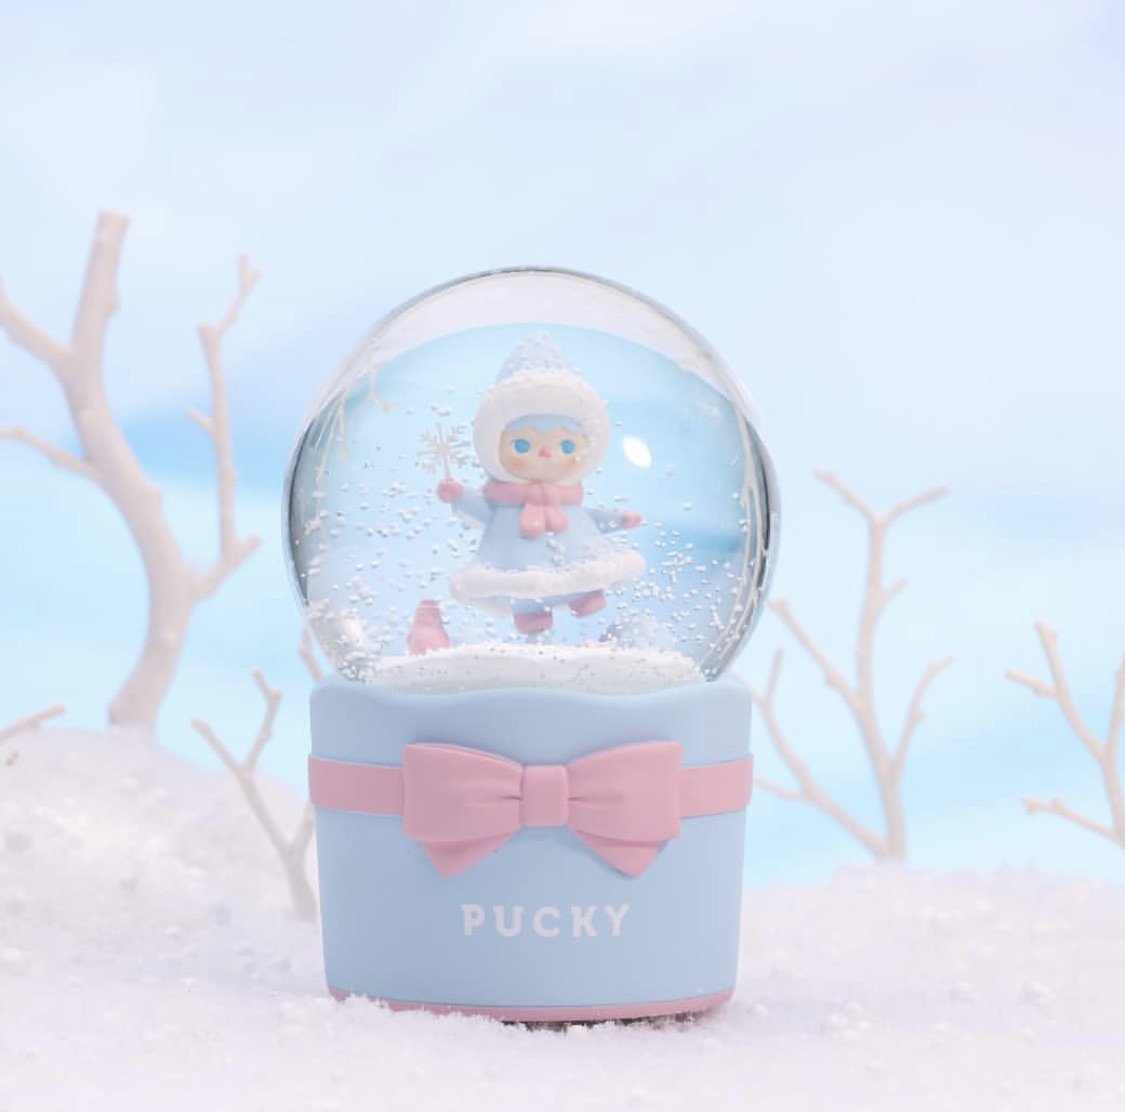 Pucky Snow Fairy Musical Crystal Ball by POP MART x PUCKY